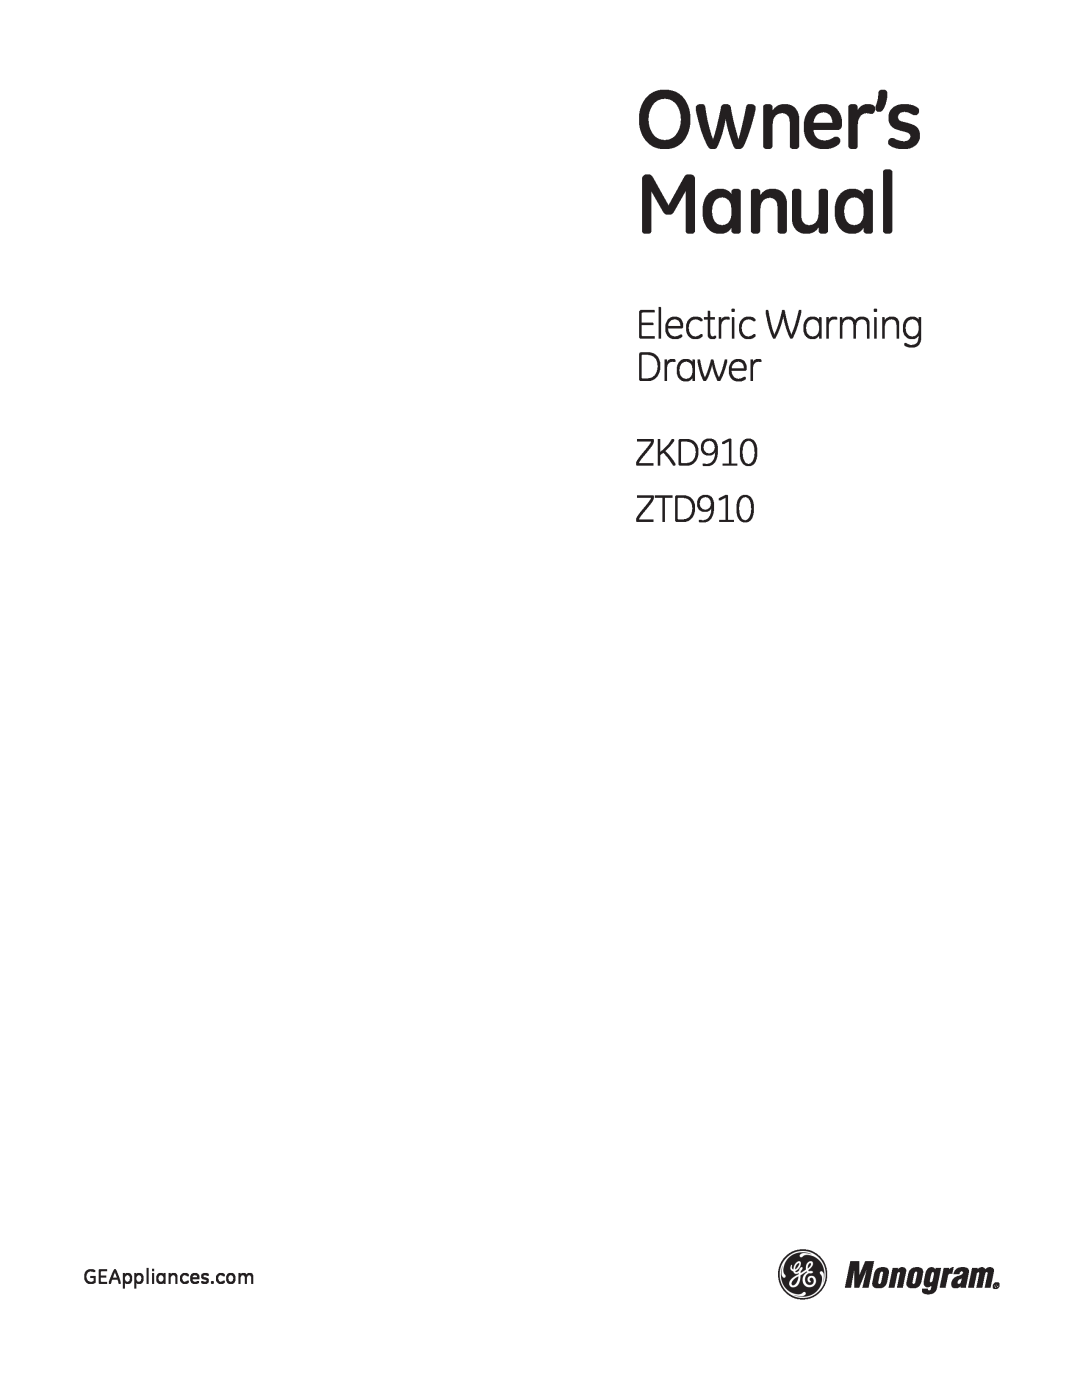 GE owner manual Owner’s Manual, Electric Warming Drawer, ZKD910 ZTD910 